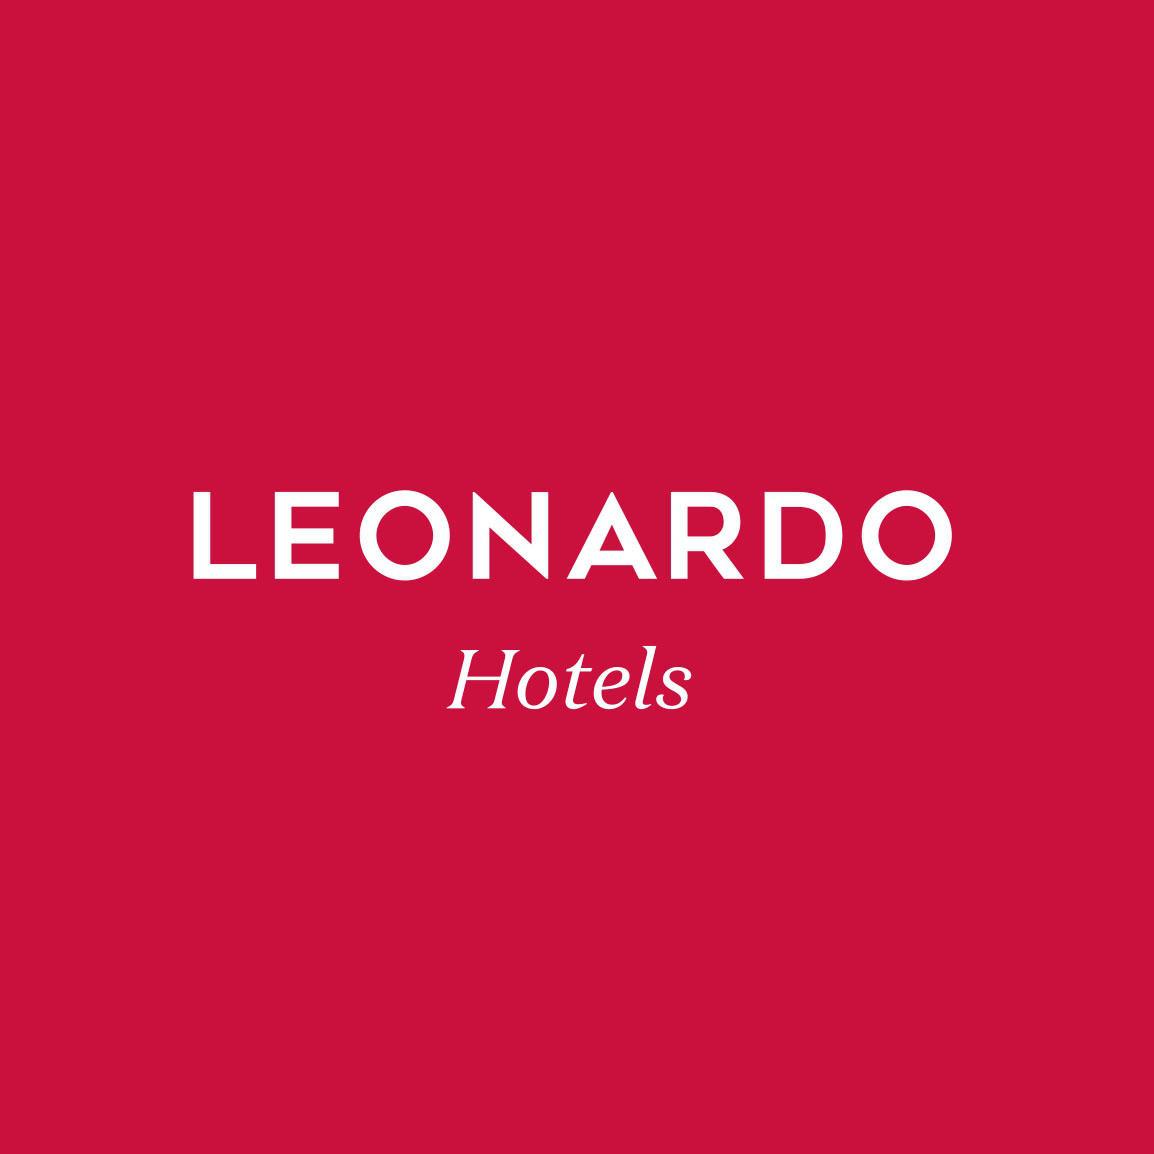 Leonardo Hotel Aberdeen - Aberdeen, Aberdeenshire AB11 5RG - 01224 381200 | ShowMeLocal.com